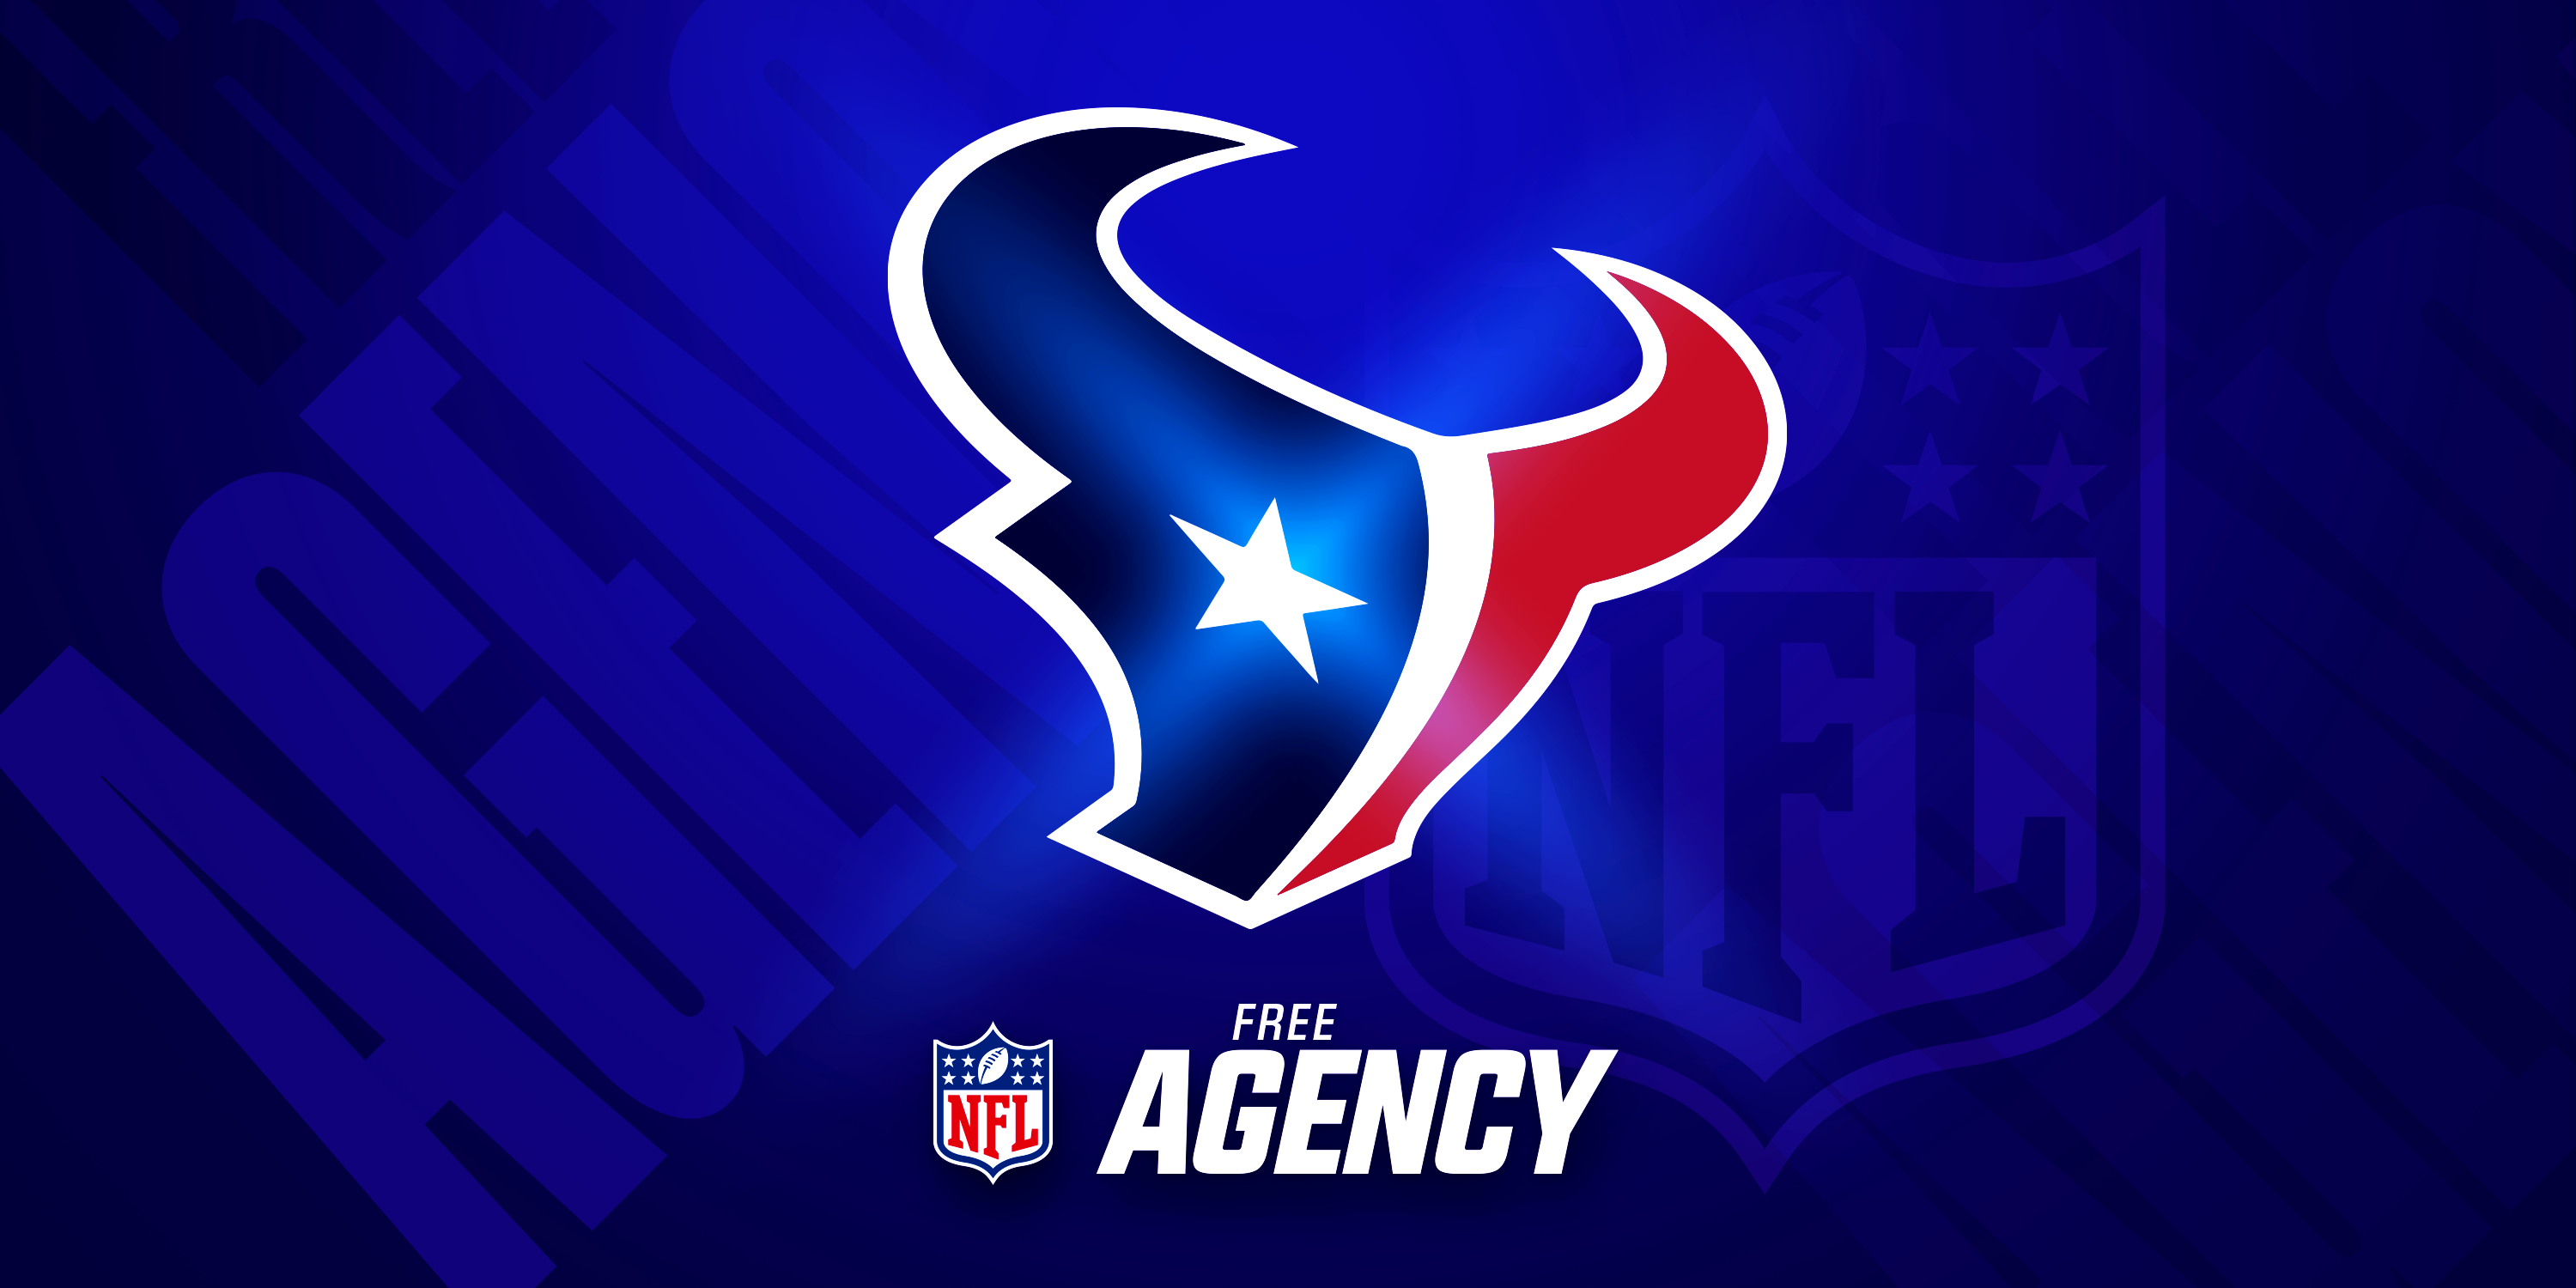 Houston Texans free agency